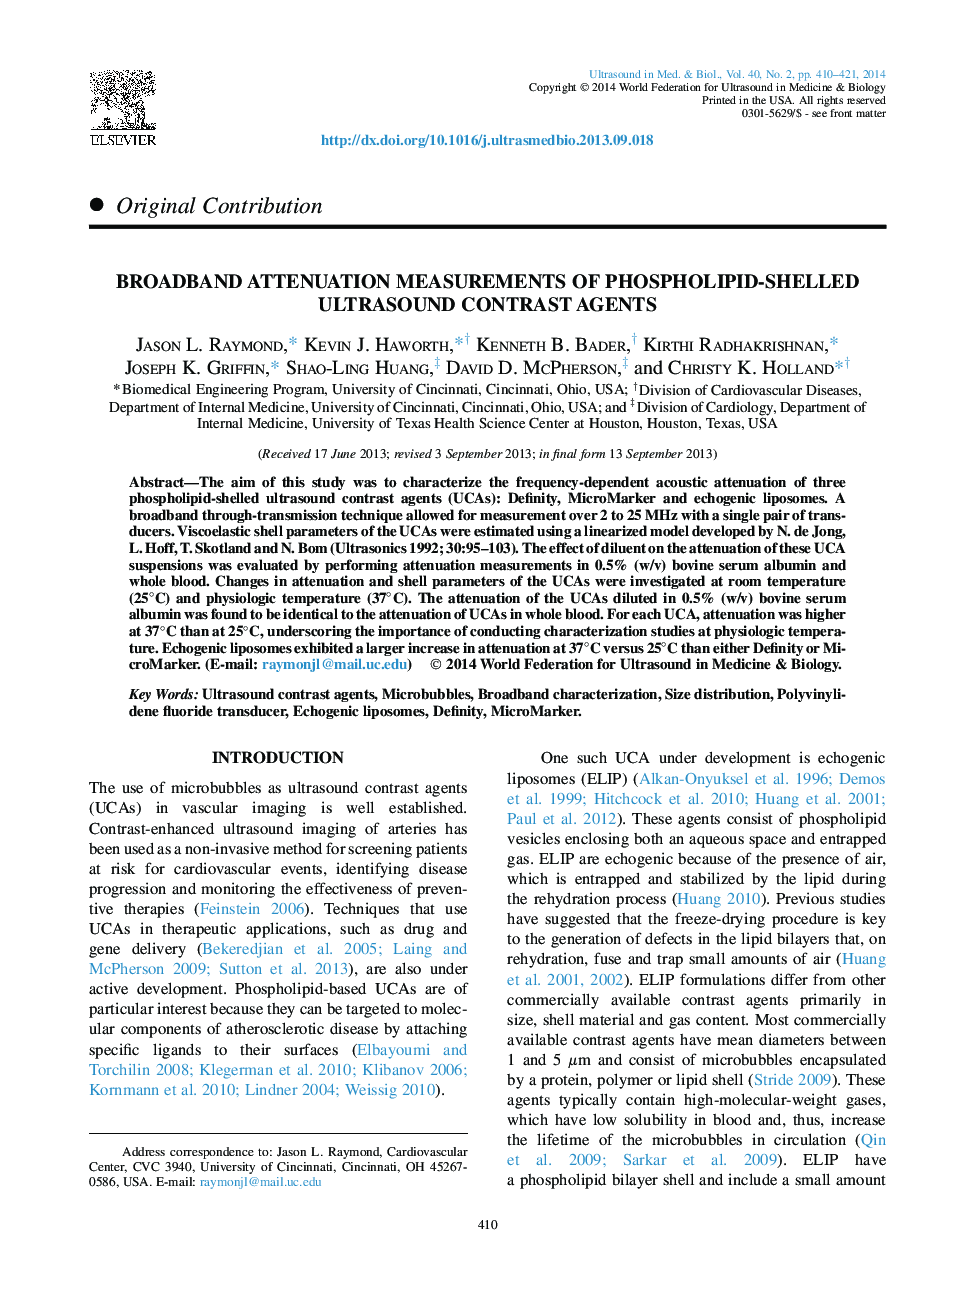 Broadband Attenuation Measurements of Phospholipid-Shelled Ultrasound Contrast Agents